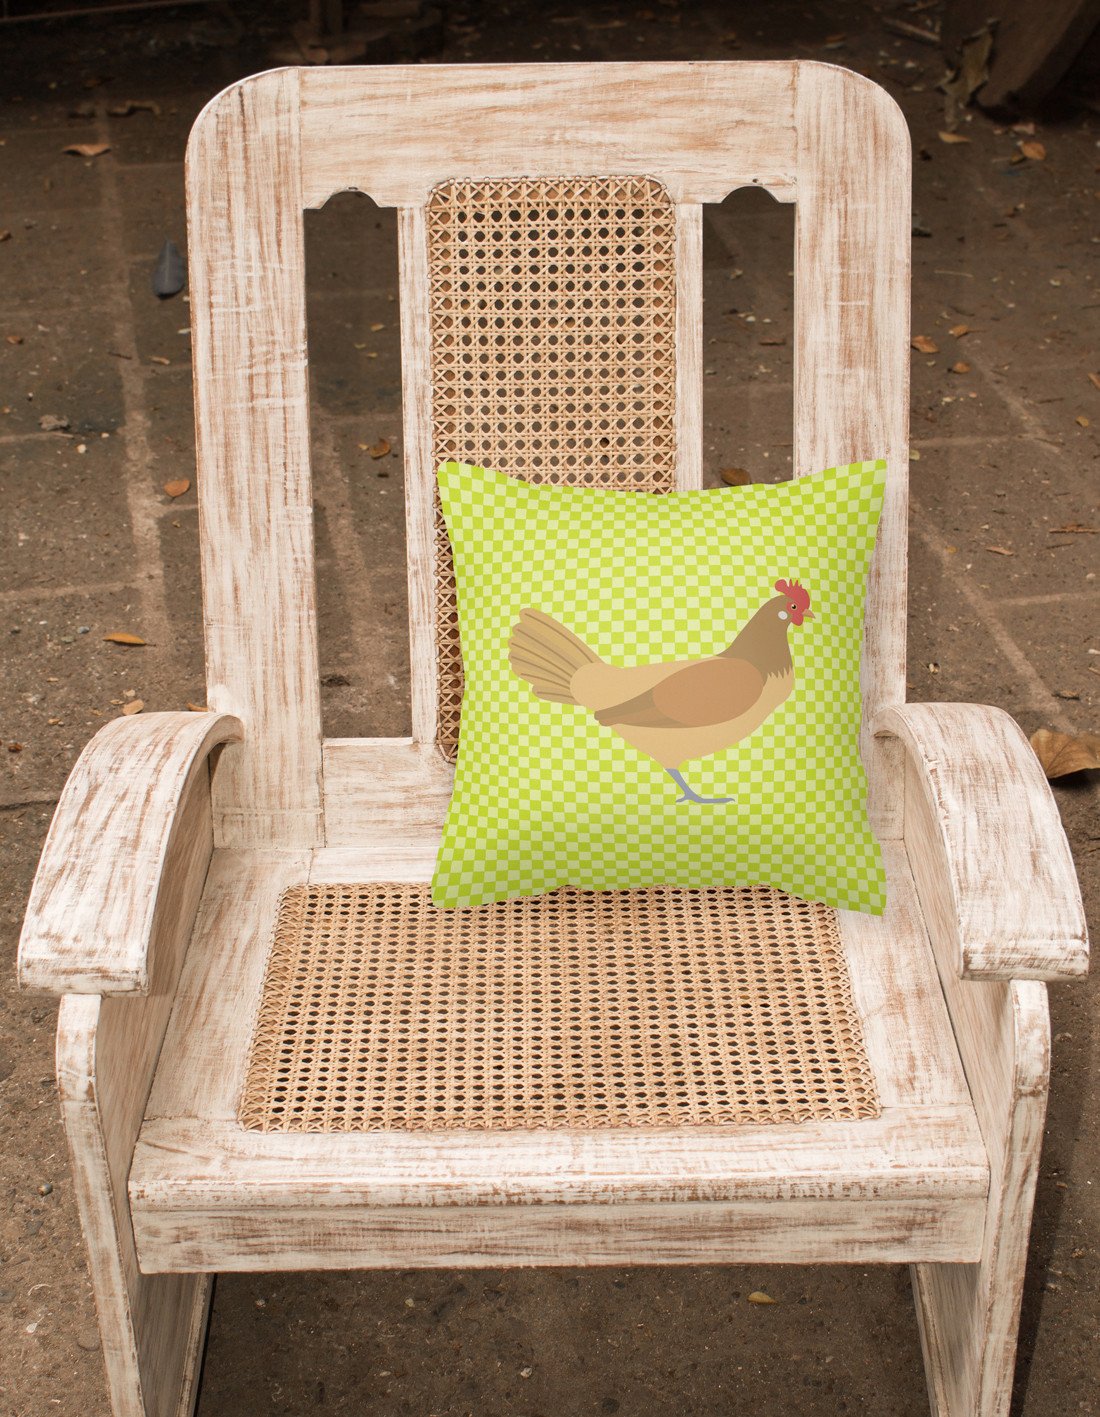 Frisian Friesian Chicken Green Fabric Decorative Pillow BB7658PW1818 by Caroline's Treasures